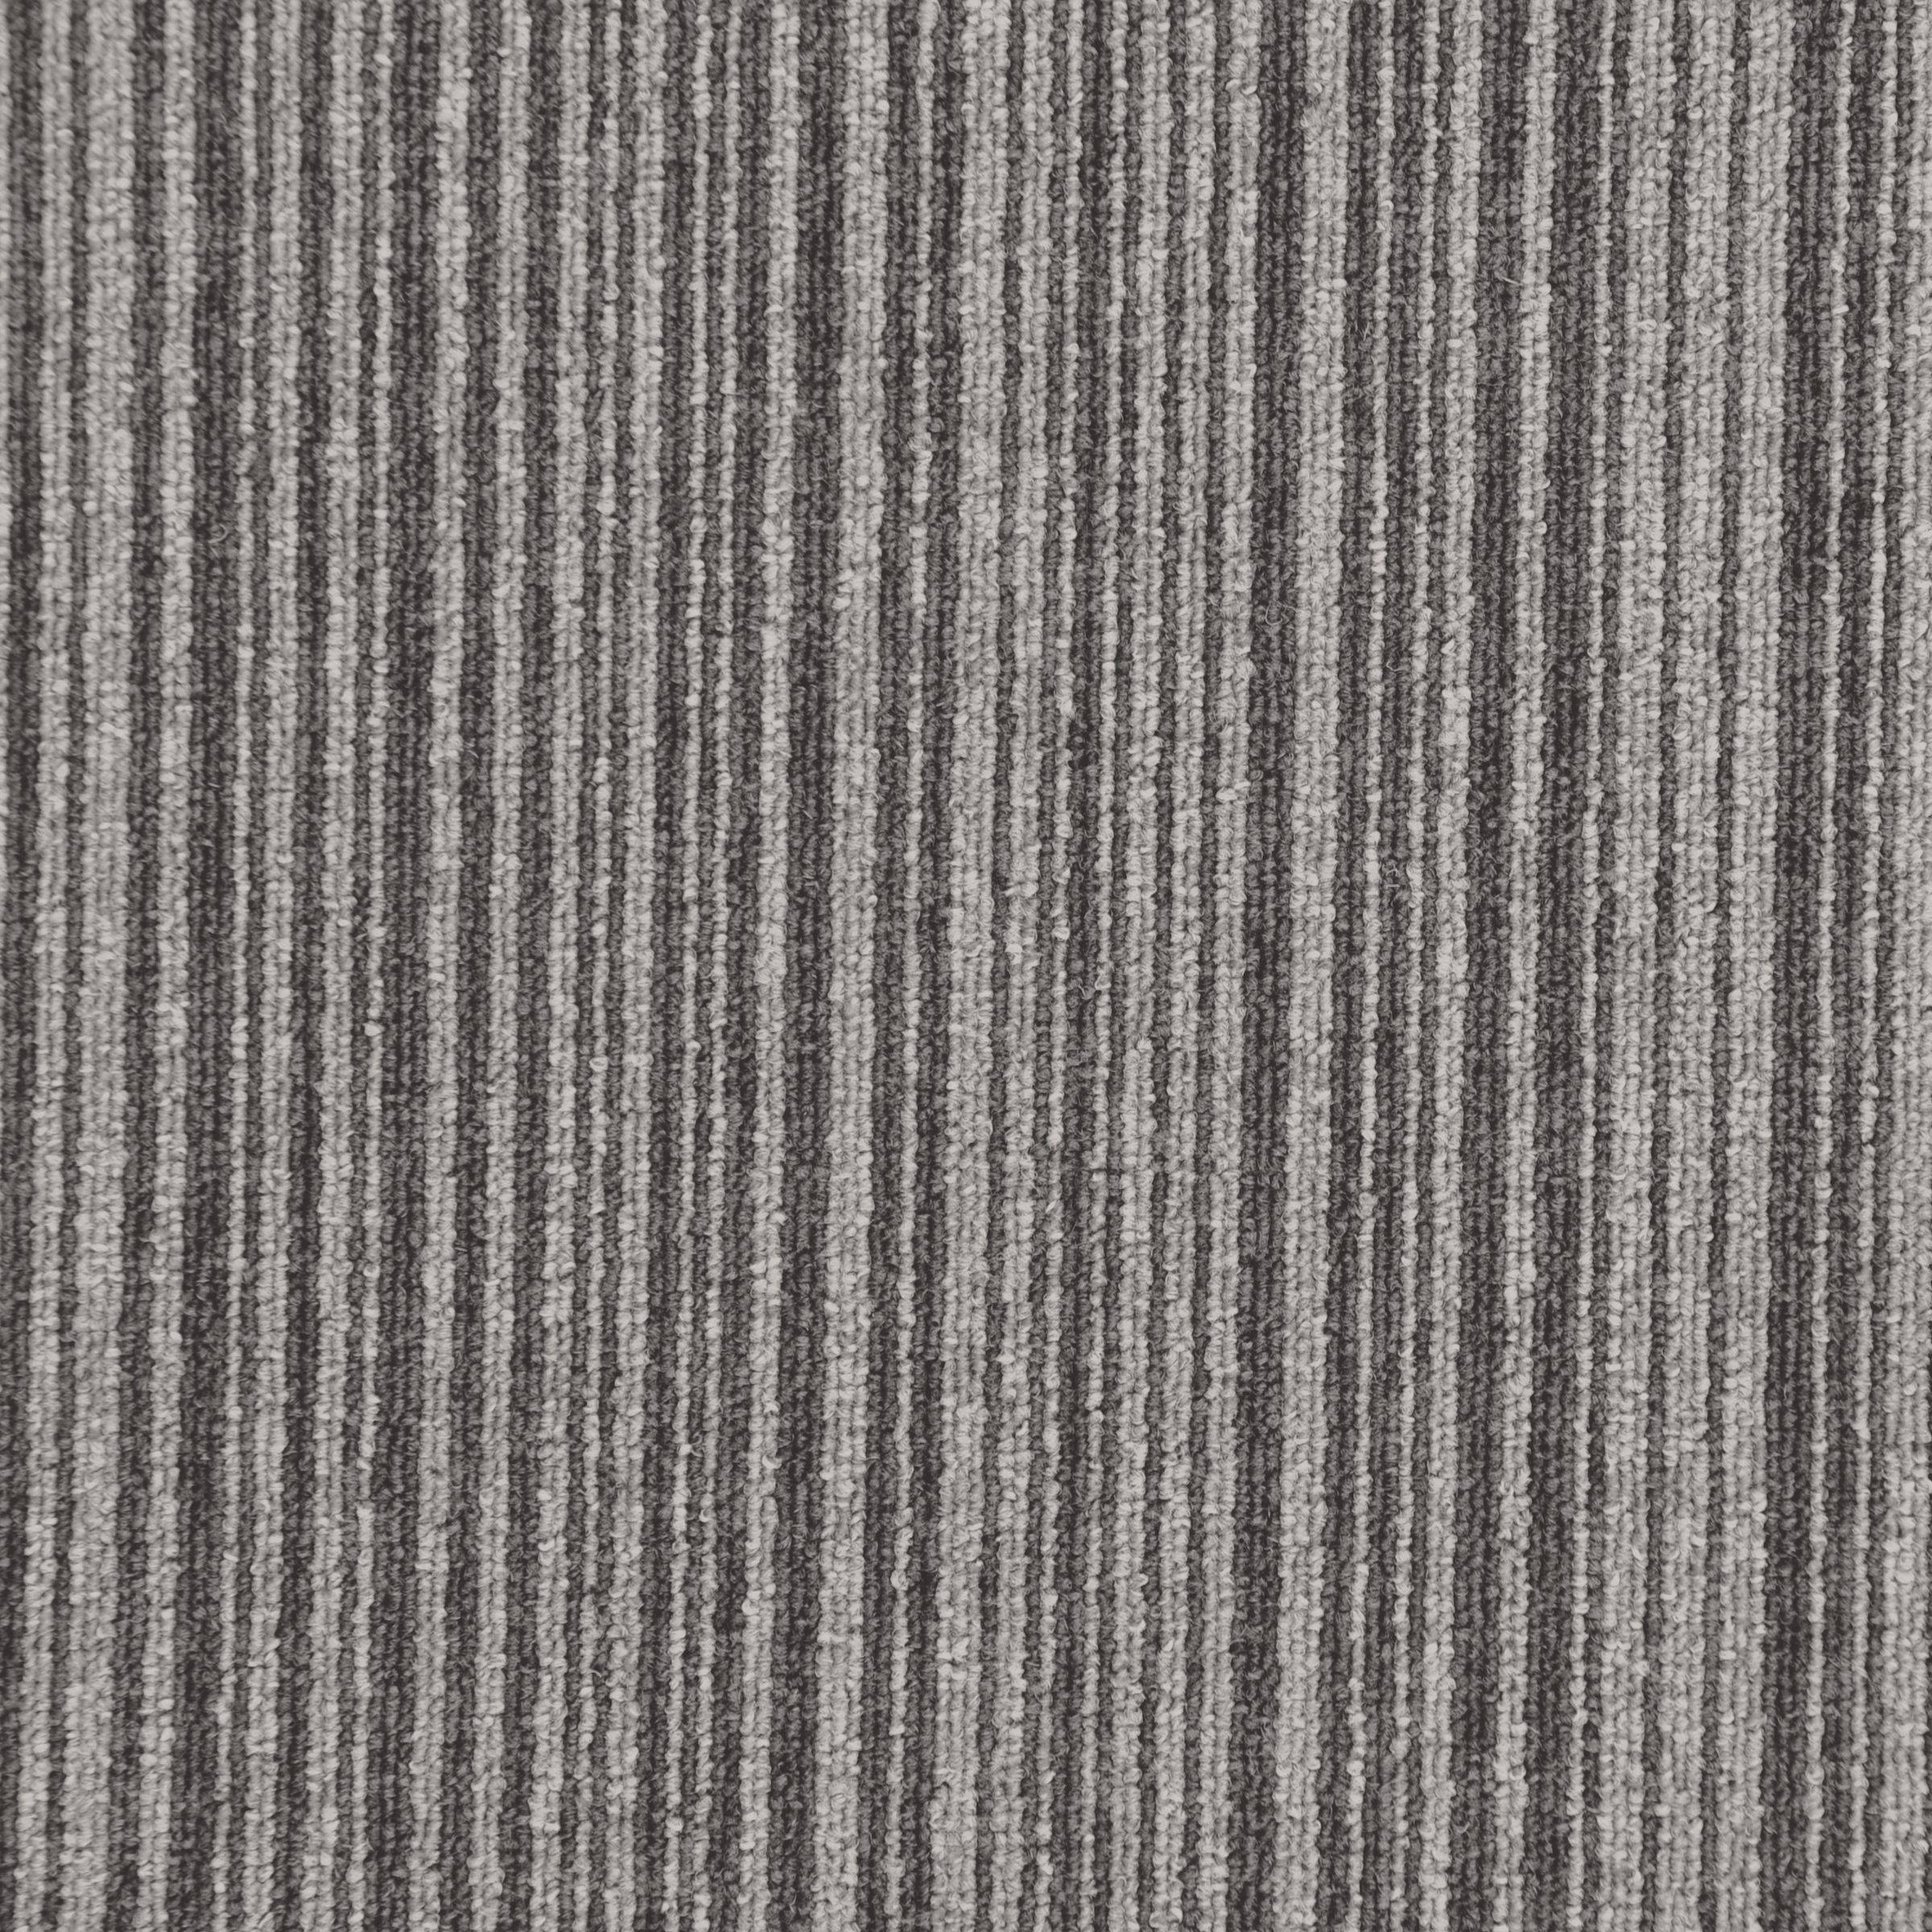 Flooring Hut Peerless Carpet Tile Black Grey Stripe